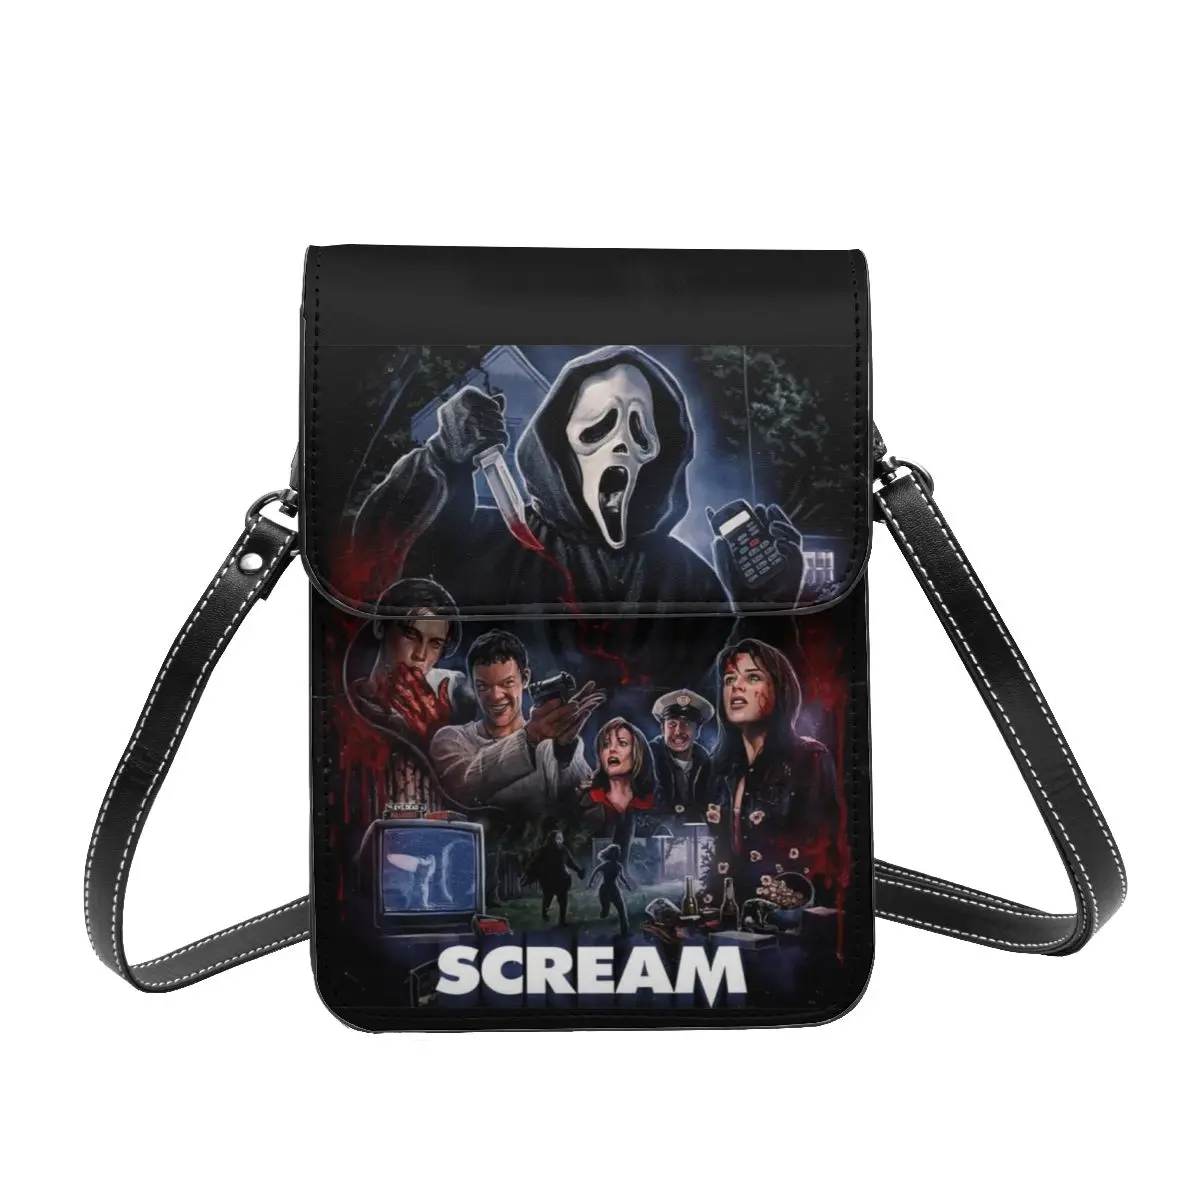 Scream Horror Movie Shoulder Bag Scream sacry halloween Female Bulk Mobile Phone Bag Retro Leather Travel Bags